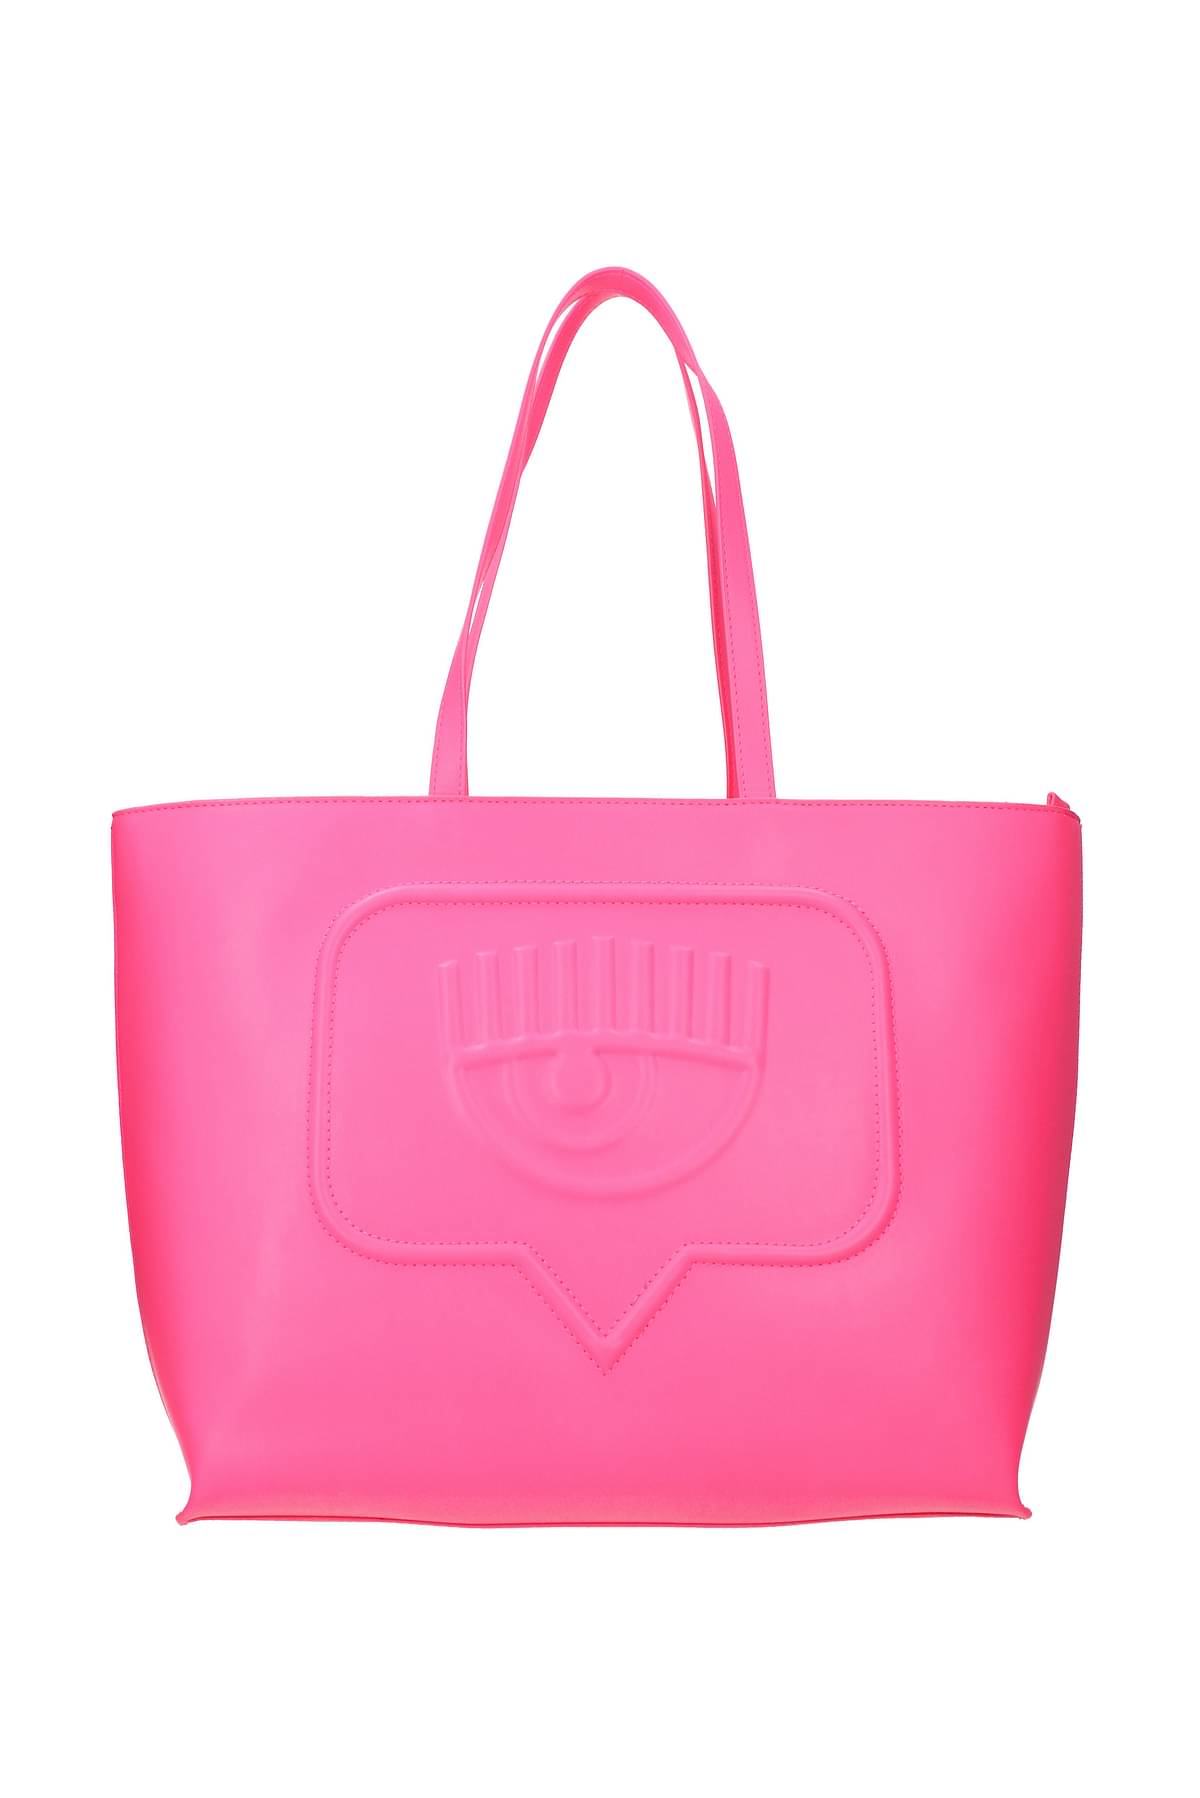 Chiara Ferragni cut-out handle tote bag, Pink